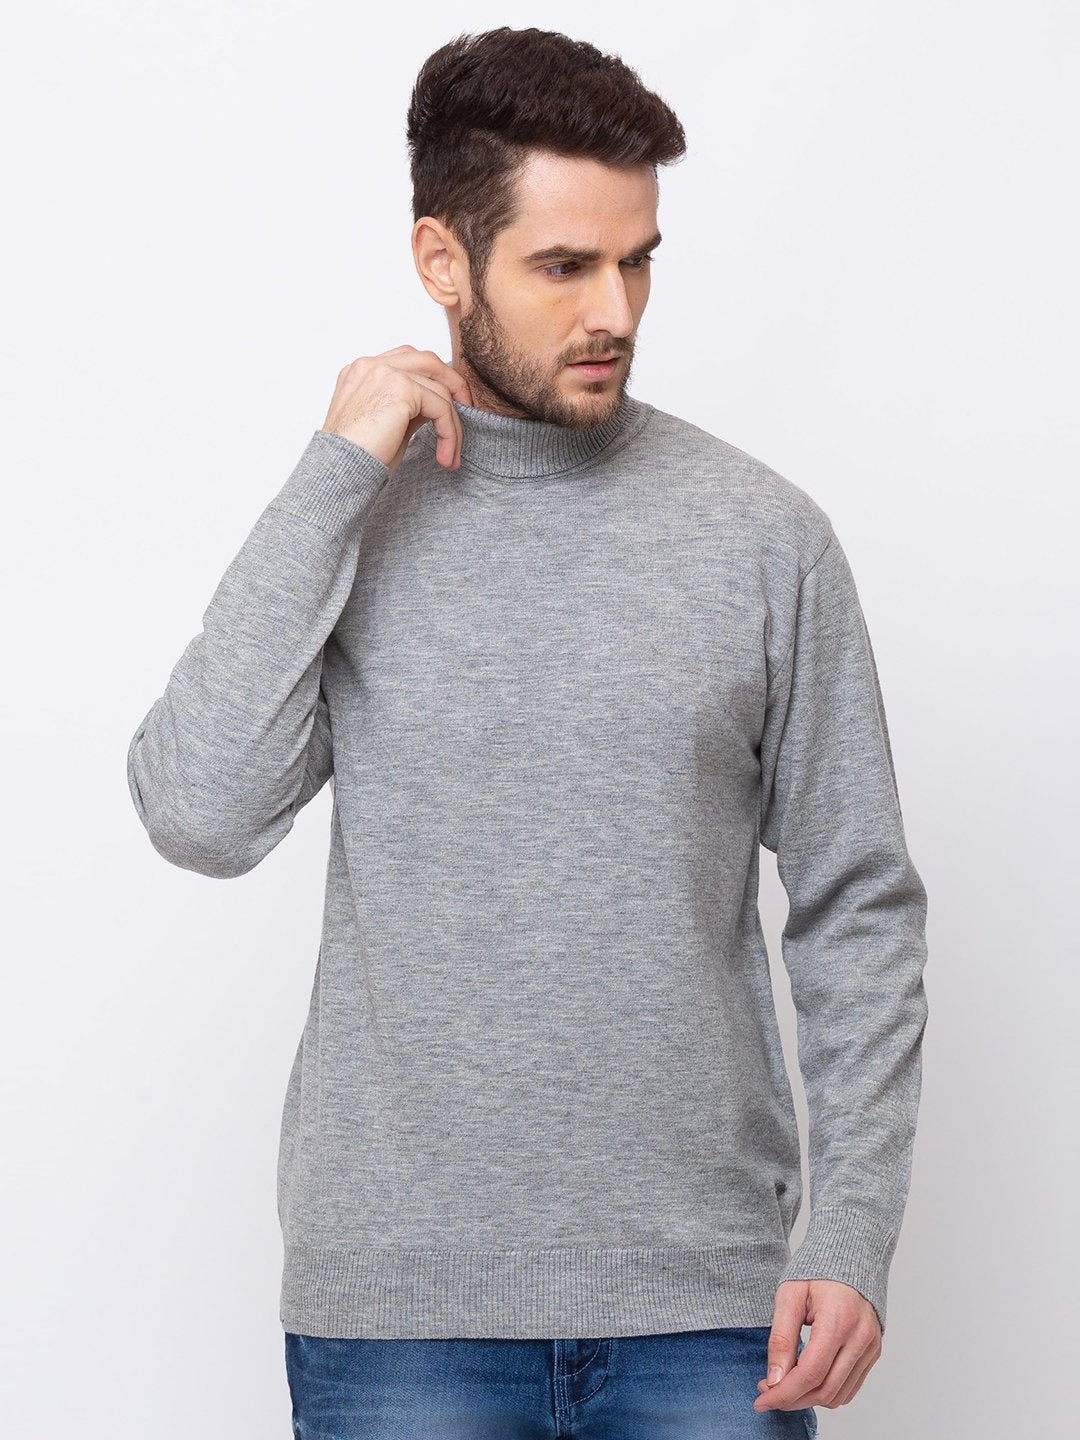 Grey Polycotton Melange Sweaters